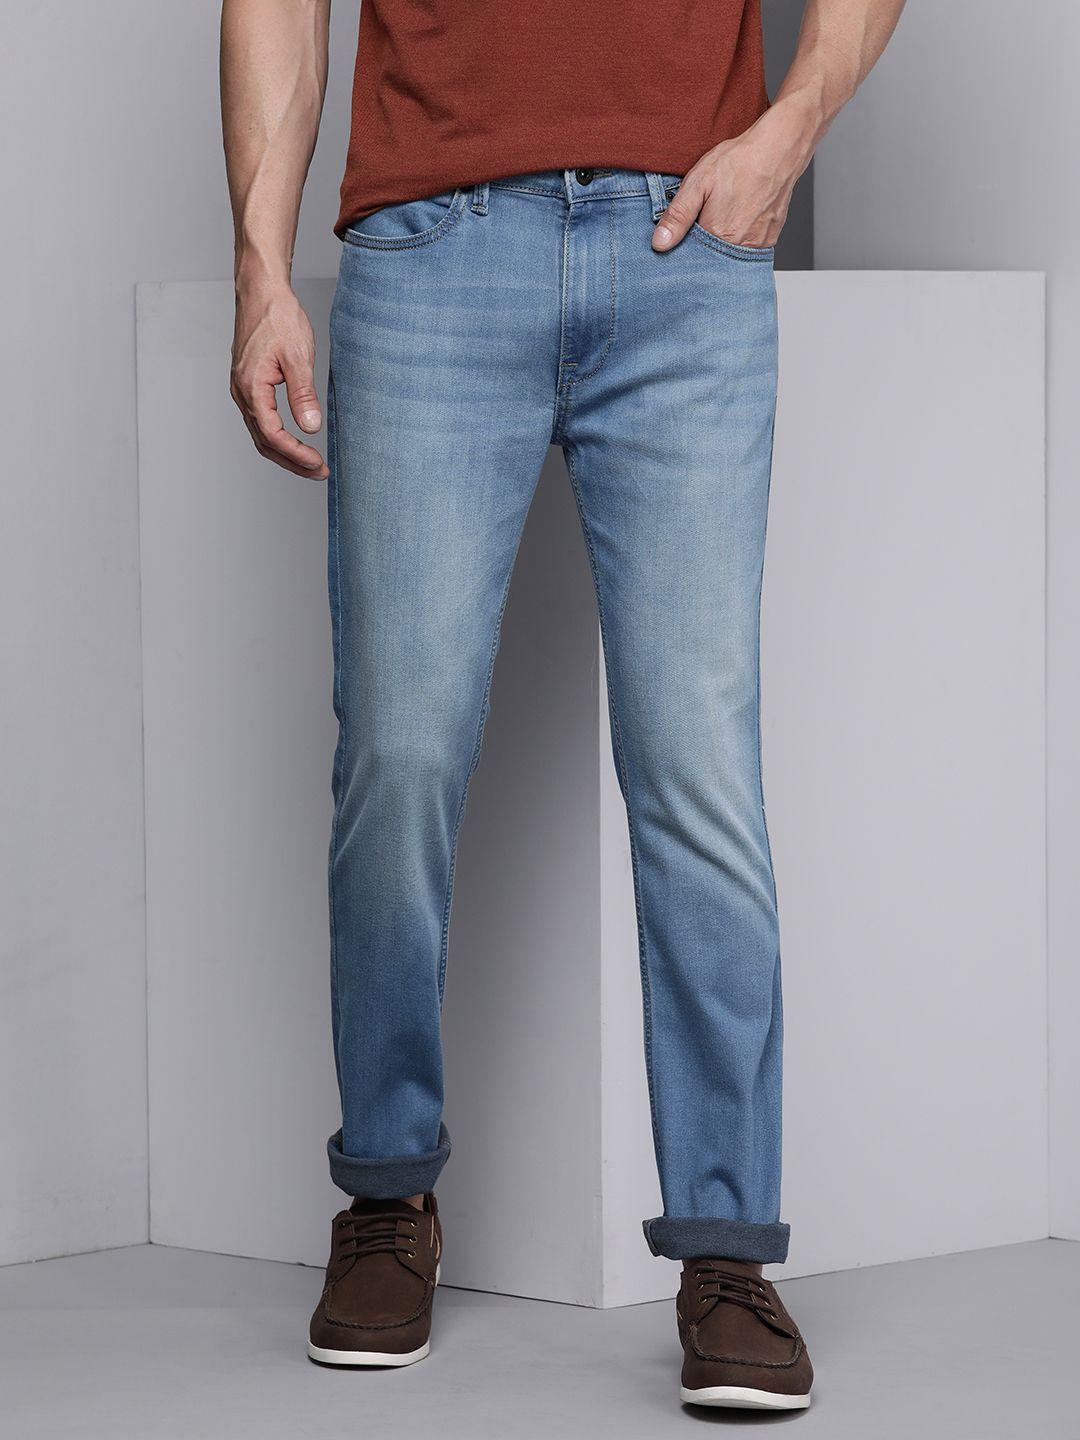 kenneth-cole-invictus-men-dark-blue-light-fade-slim-fit-mid-rise-quintessential-jeans